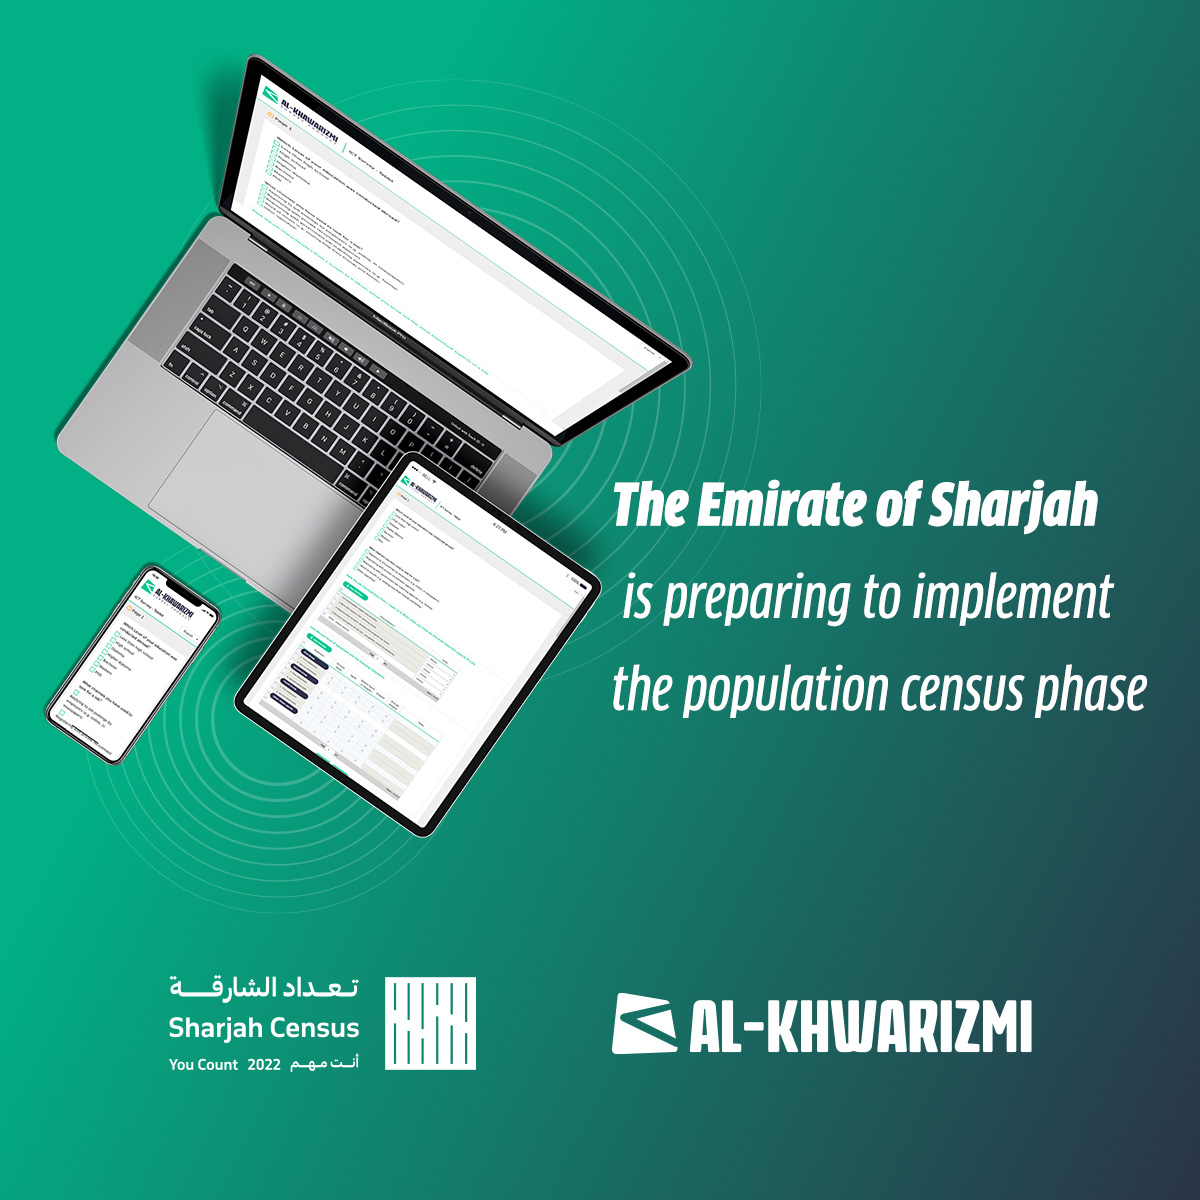 Sharjah Census utilizes Al-Khwarizmi platform